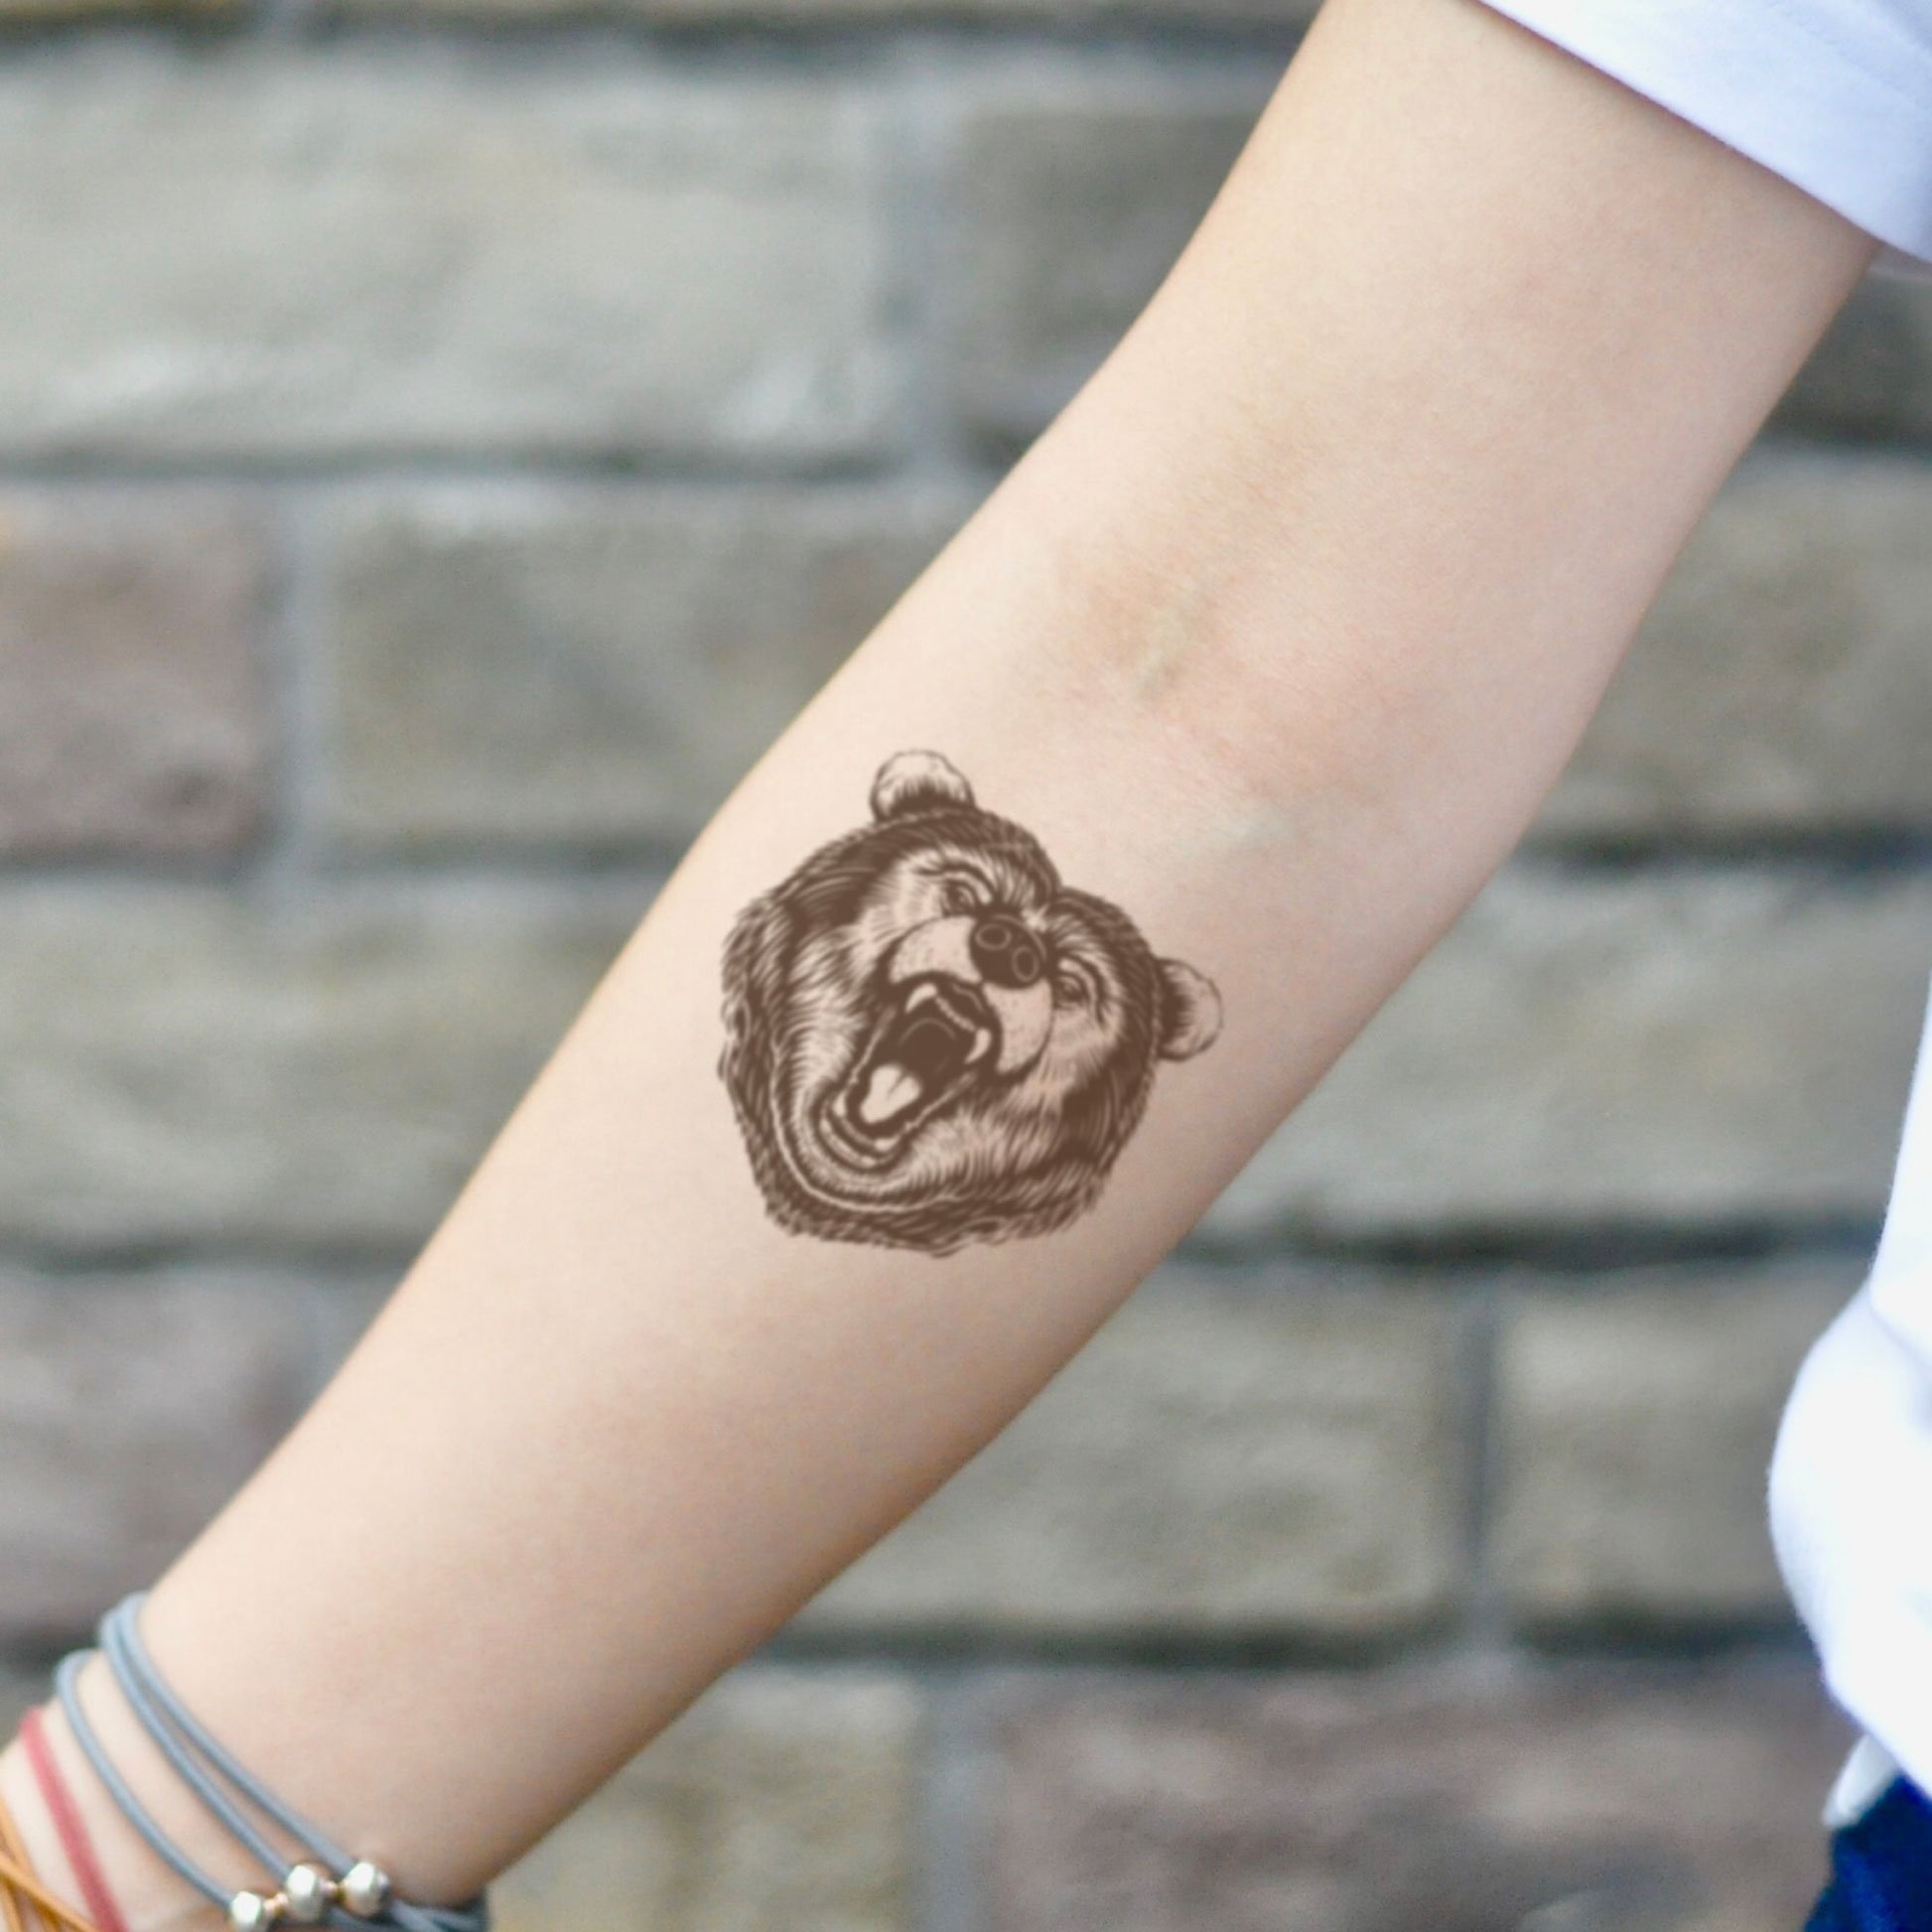 fake small brown ink bear animal temporary tattoo sticker design idea on inner arm